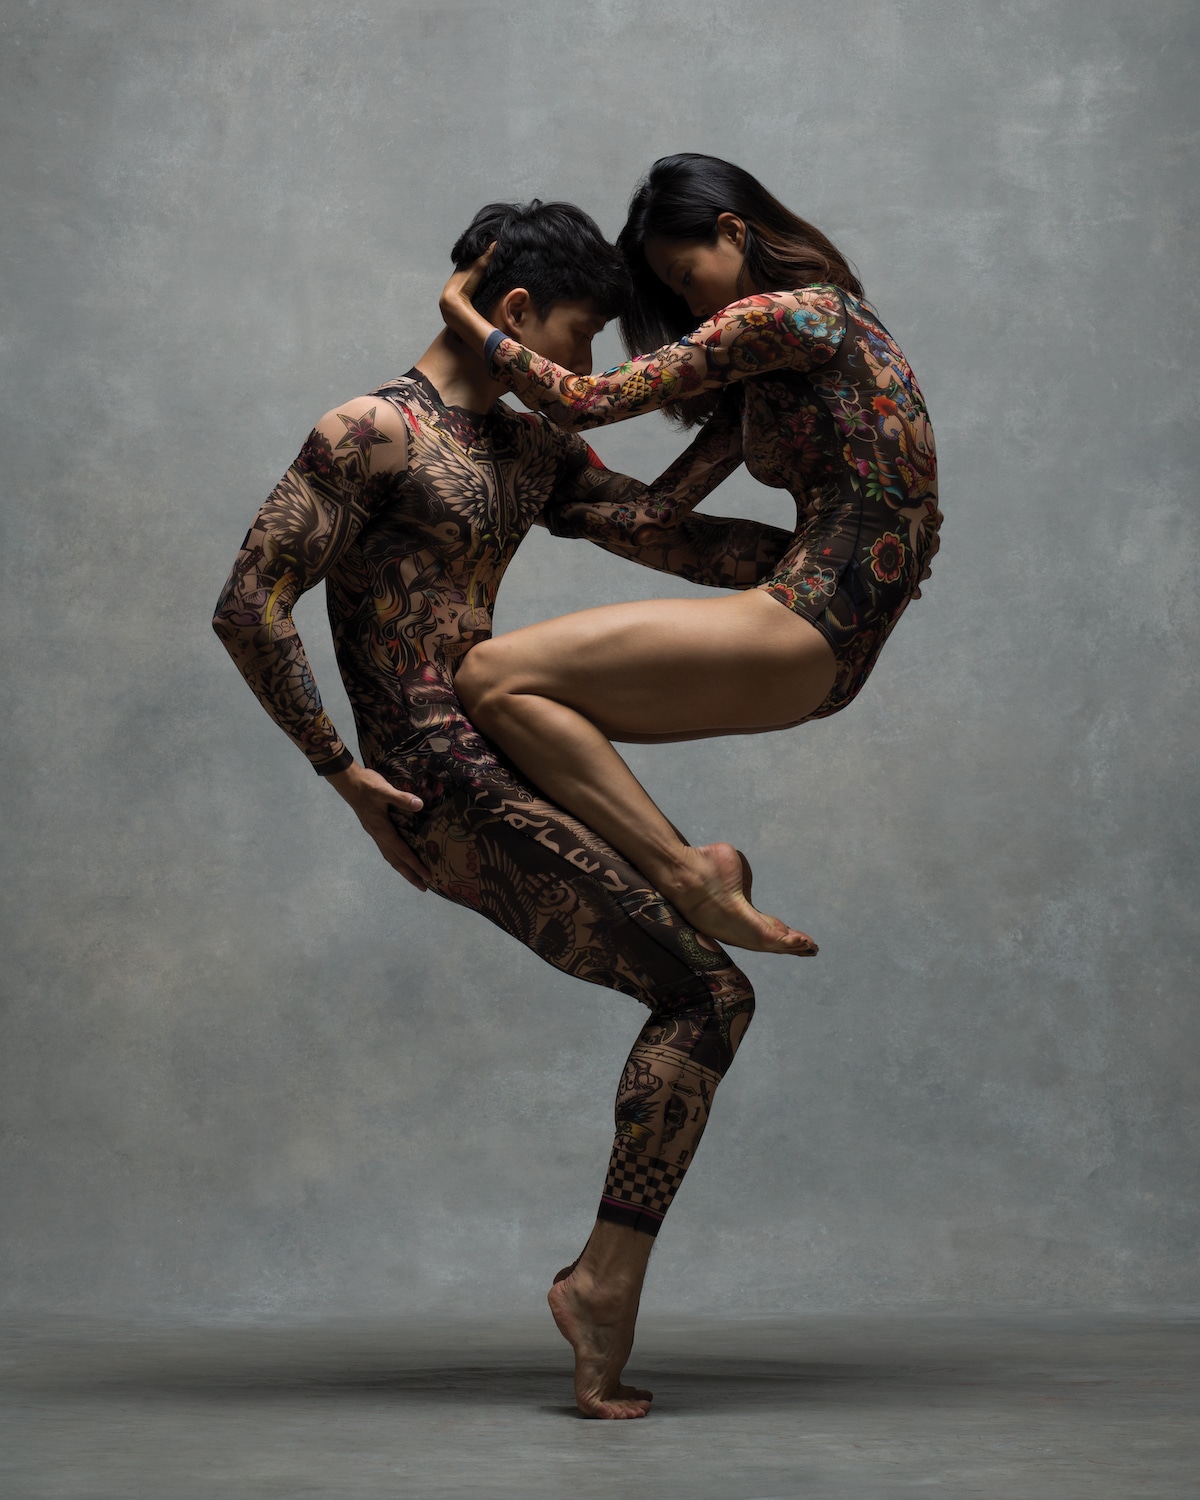 Artistic Photos of Ballet Dancers